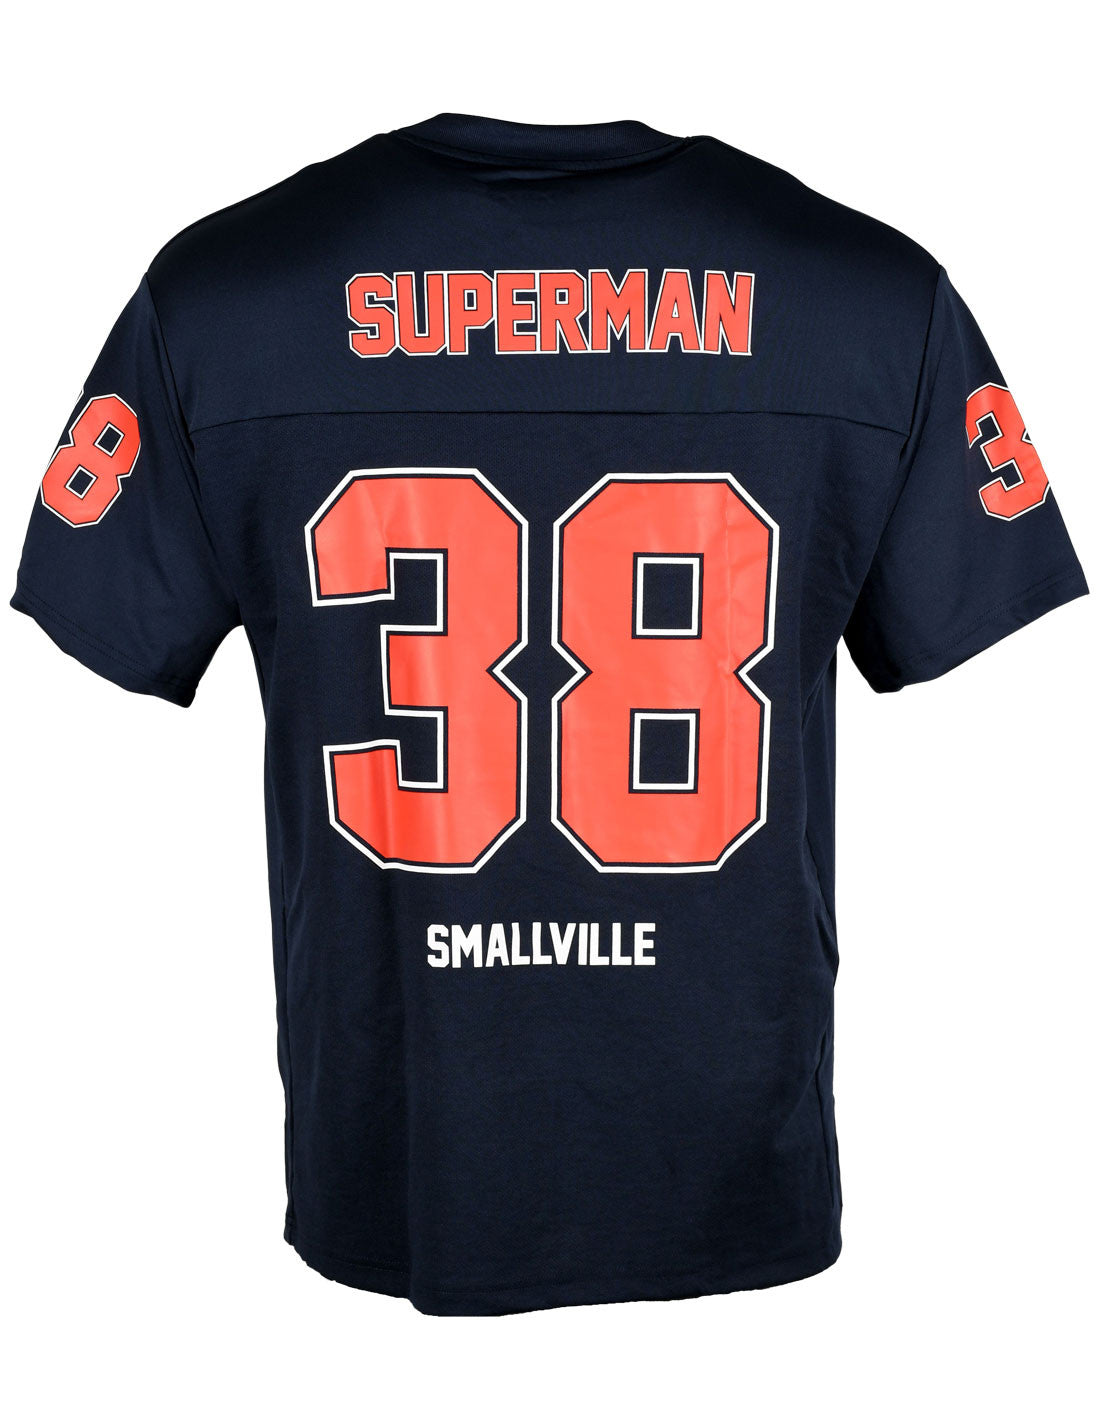 T-shirt Sport Superman DC Comics - Smallville 38